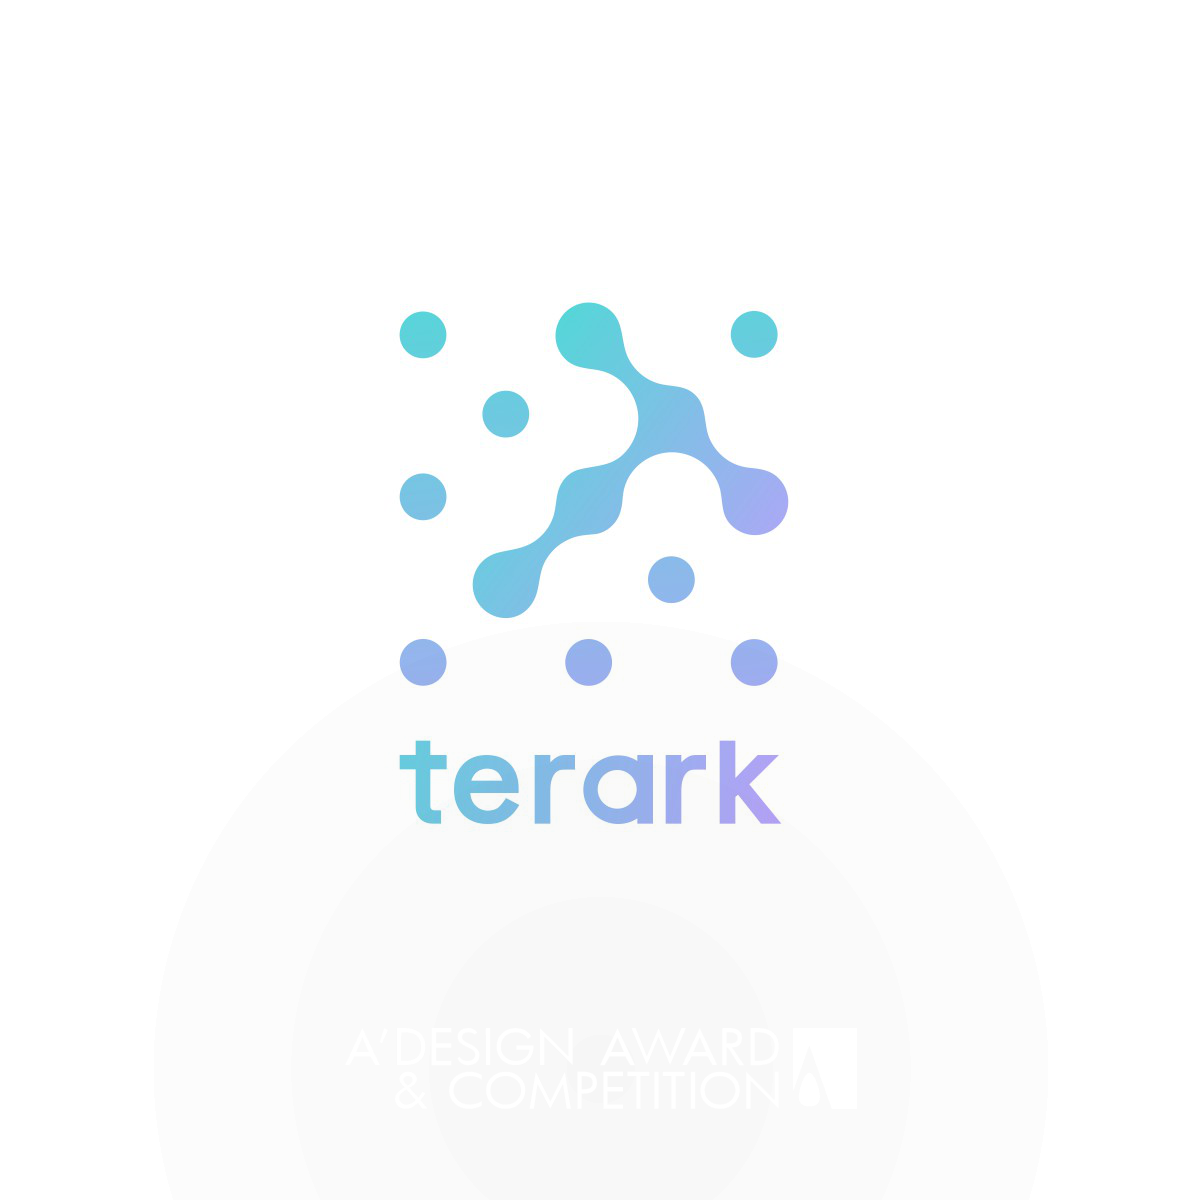 Terark Visual Identity Design